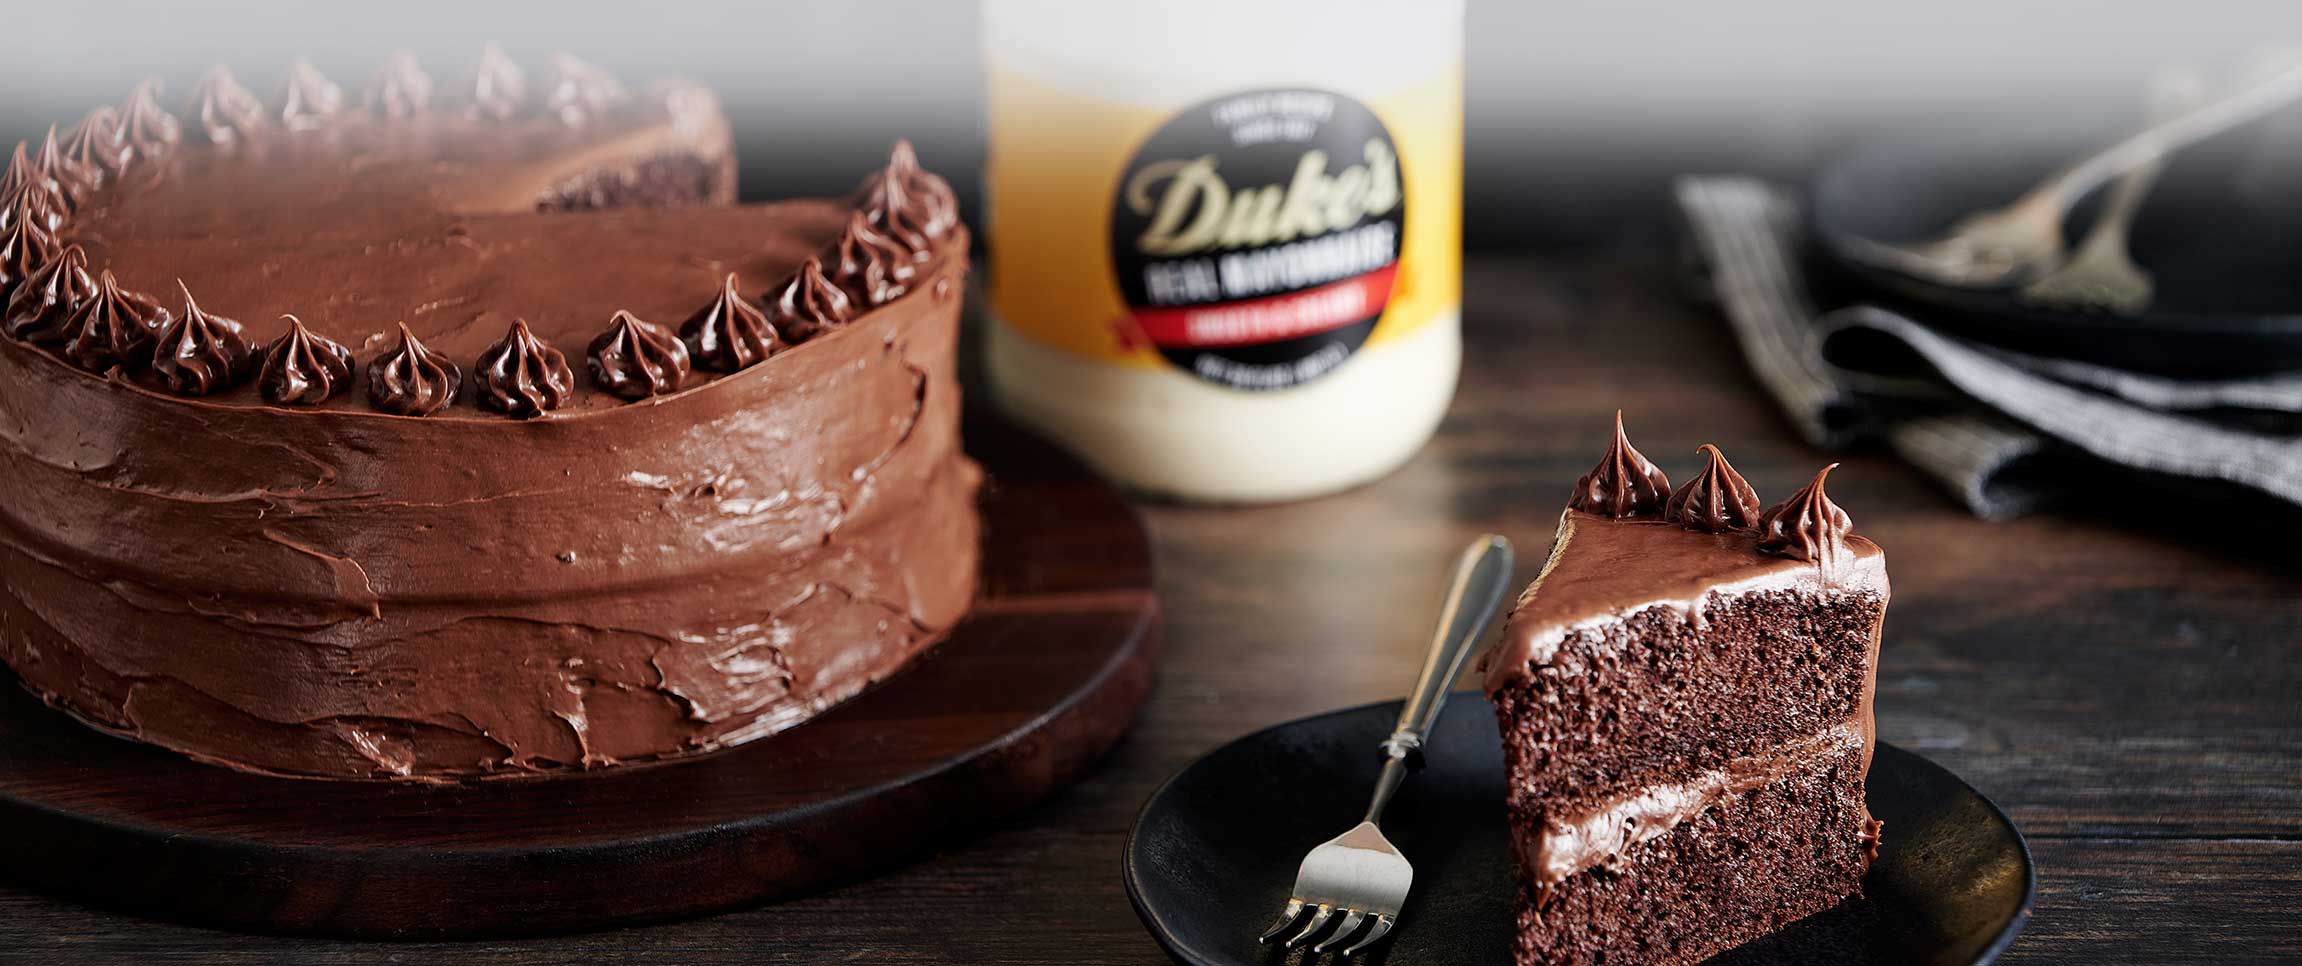 Dukes Chocolate Cake